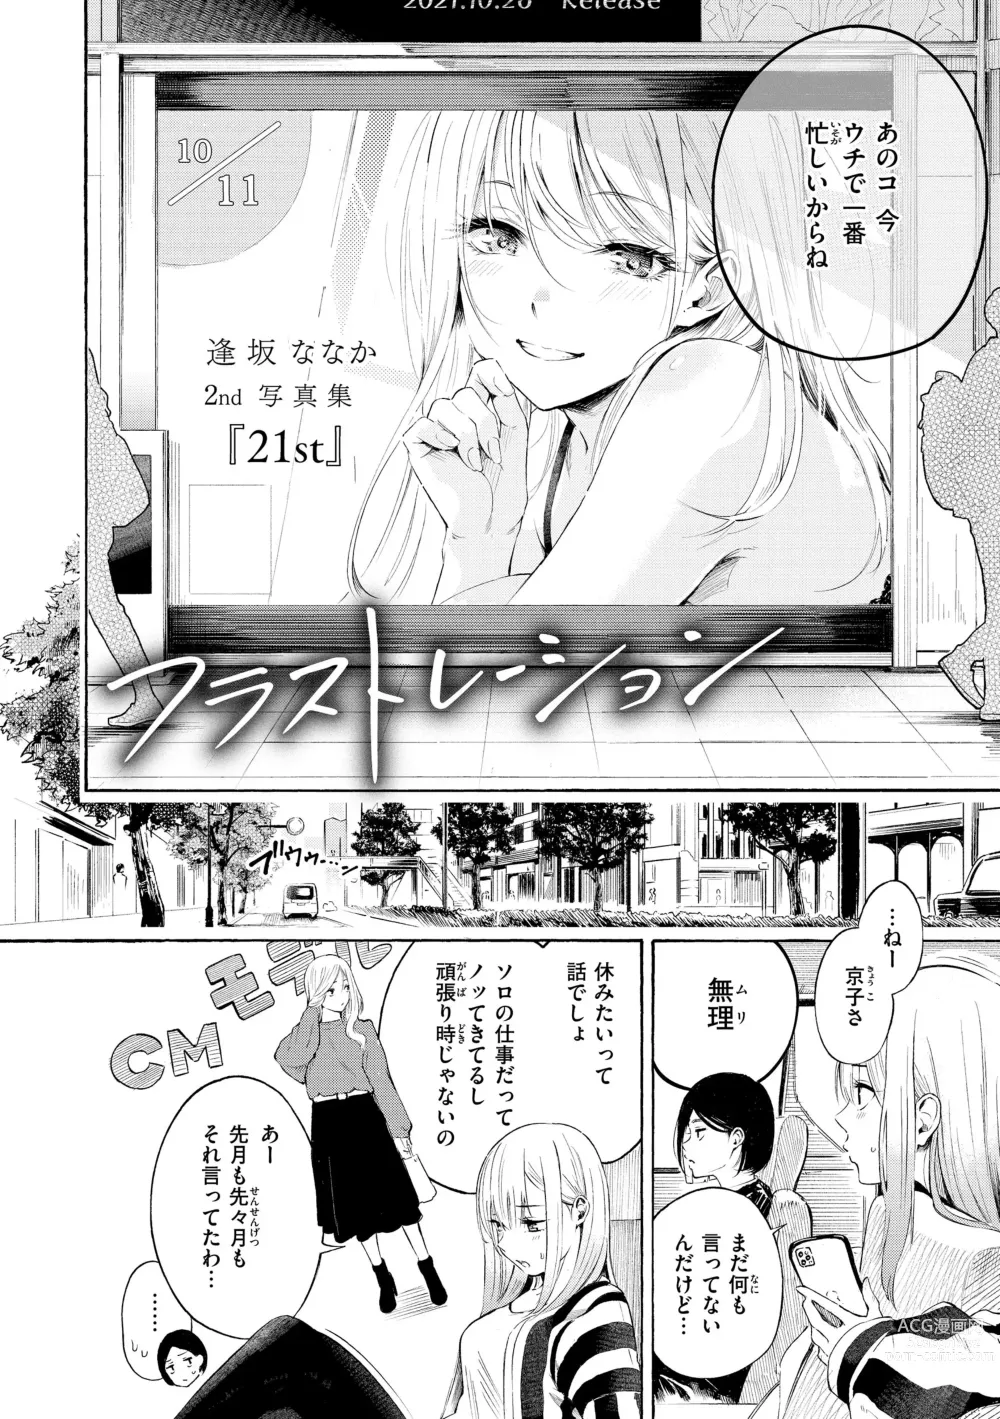 Page 6 of manga Frustration Girls - Mura Mura Girls ready for you!!